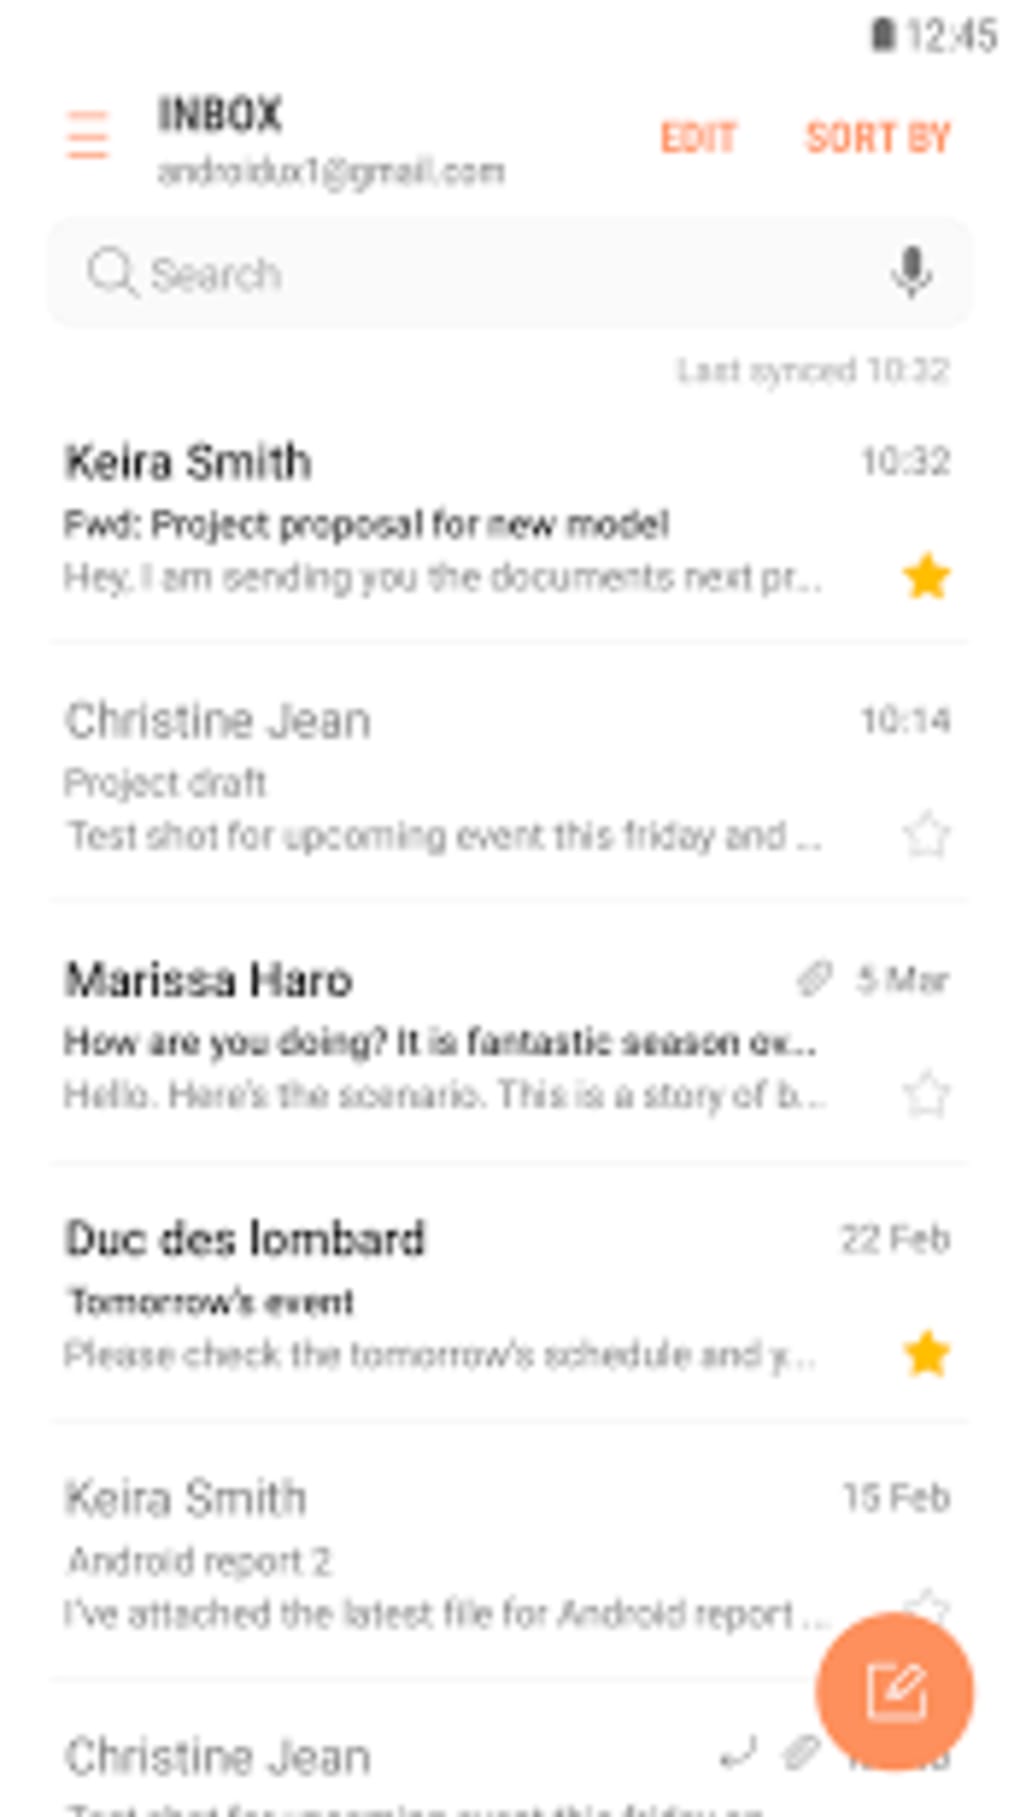 Email Temporário - Galaxy Mail APK (Android App) - Free Download